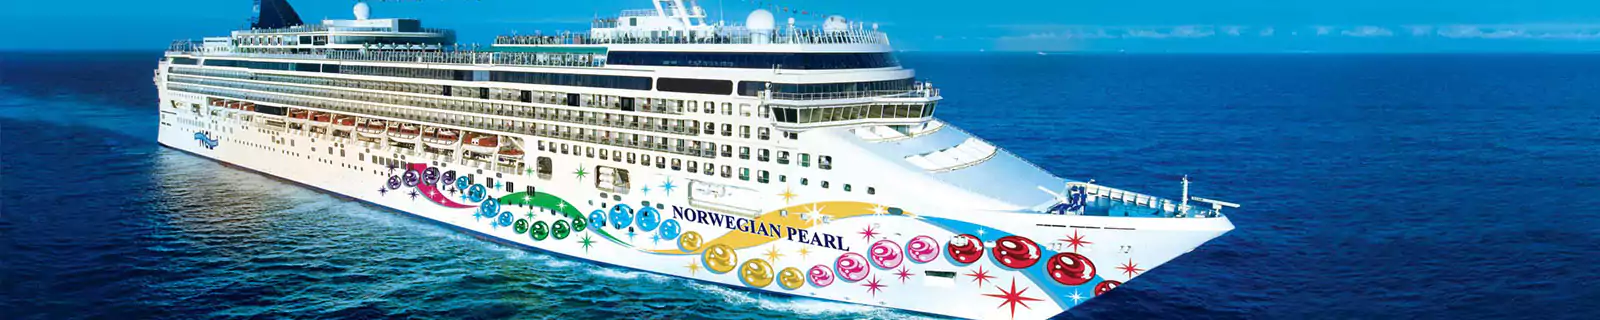 Norwegian Pearl Norwegian Pearl Cruise Ship Norwegian Pearl Deck Plans Norwegian